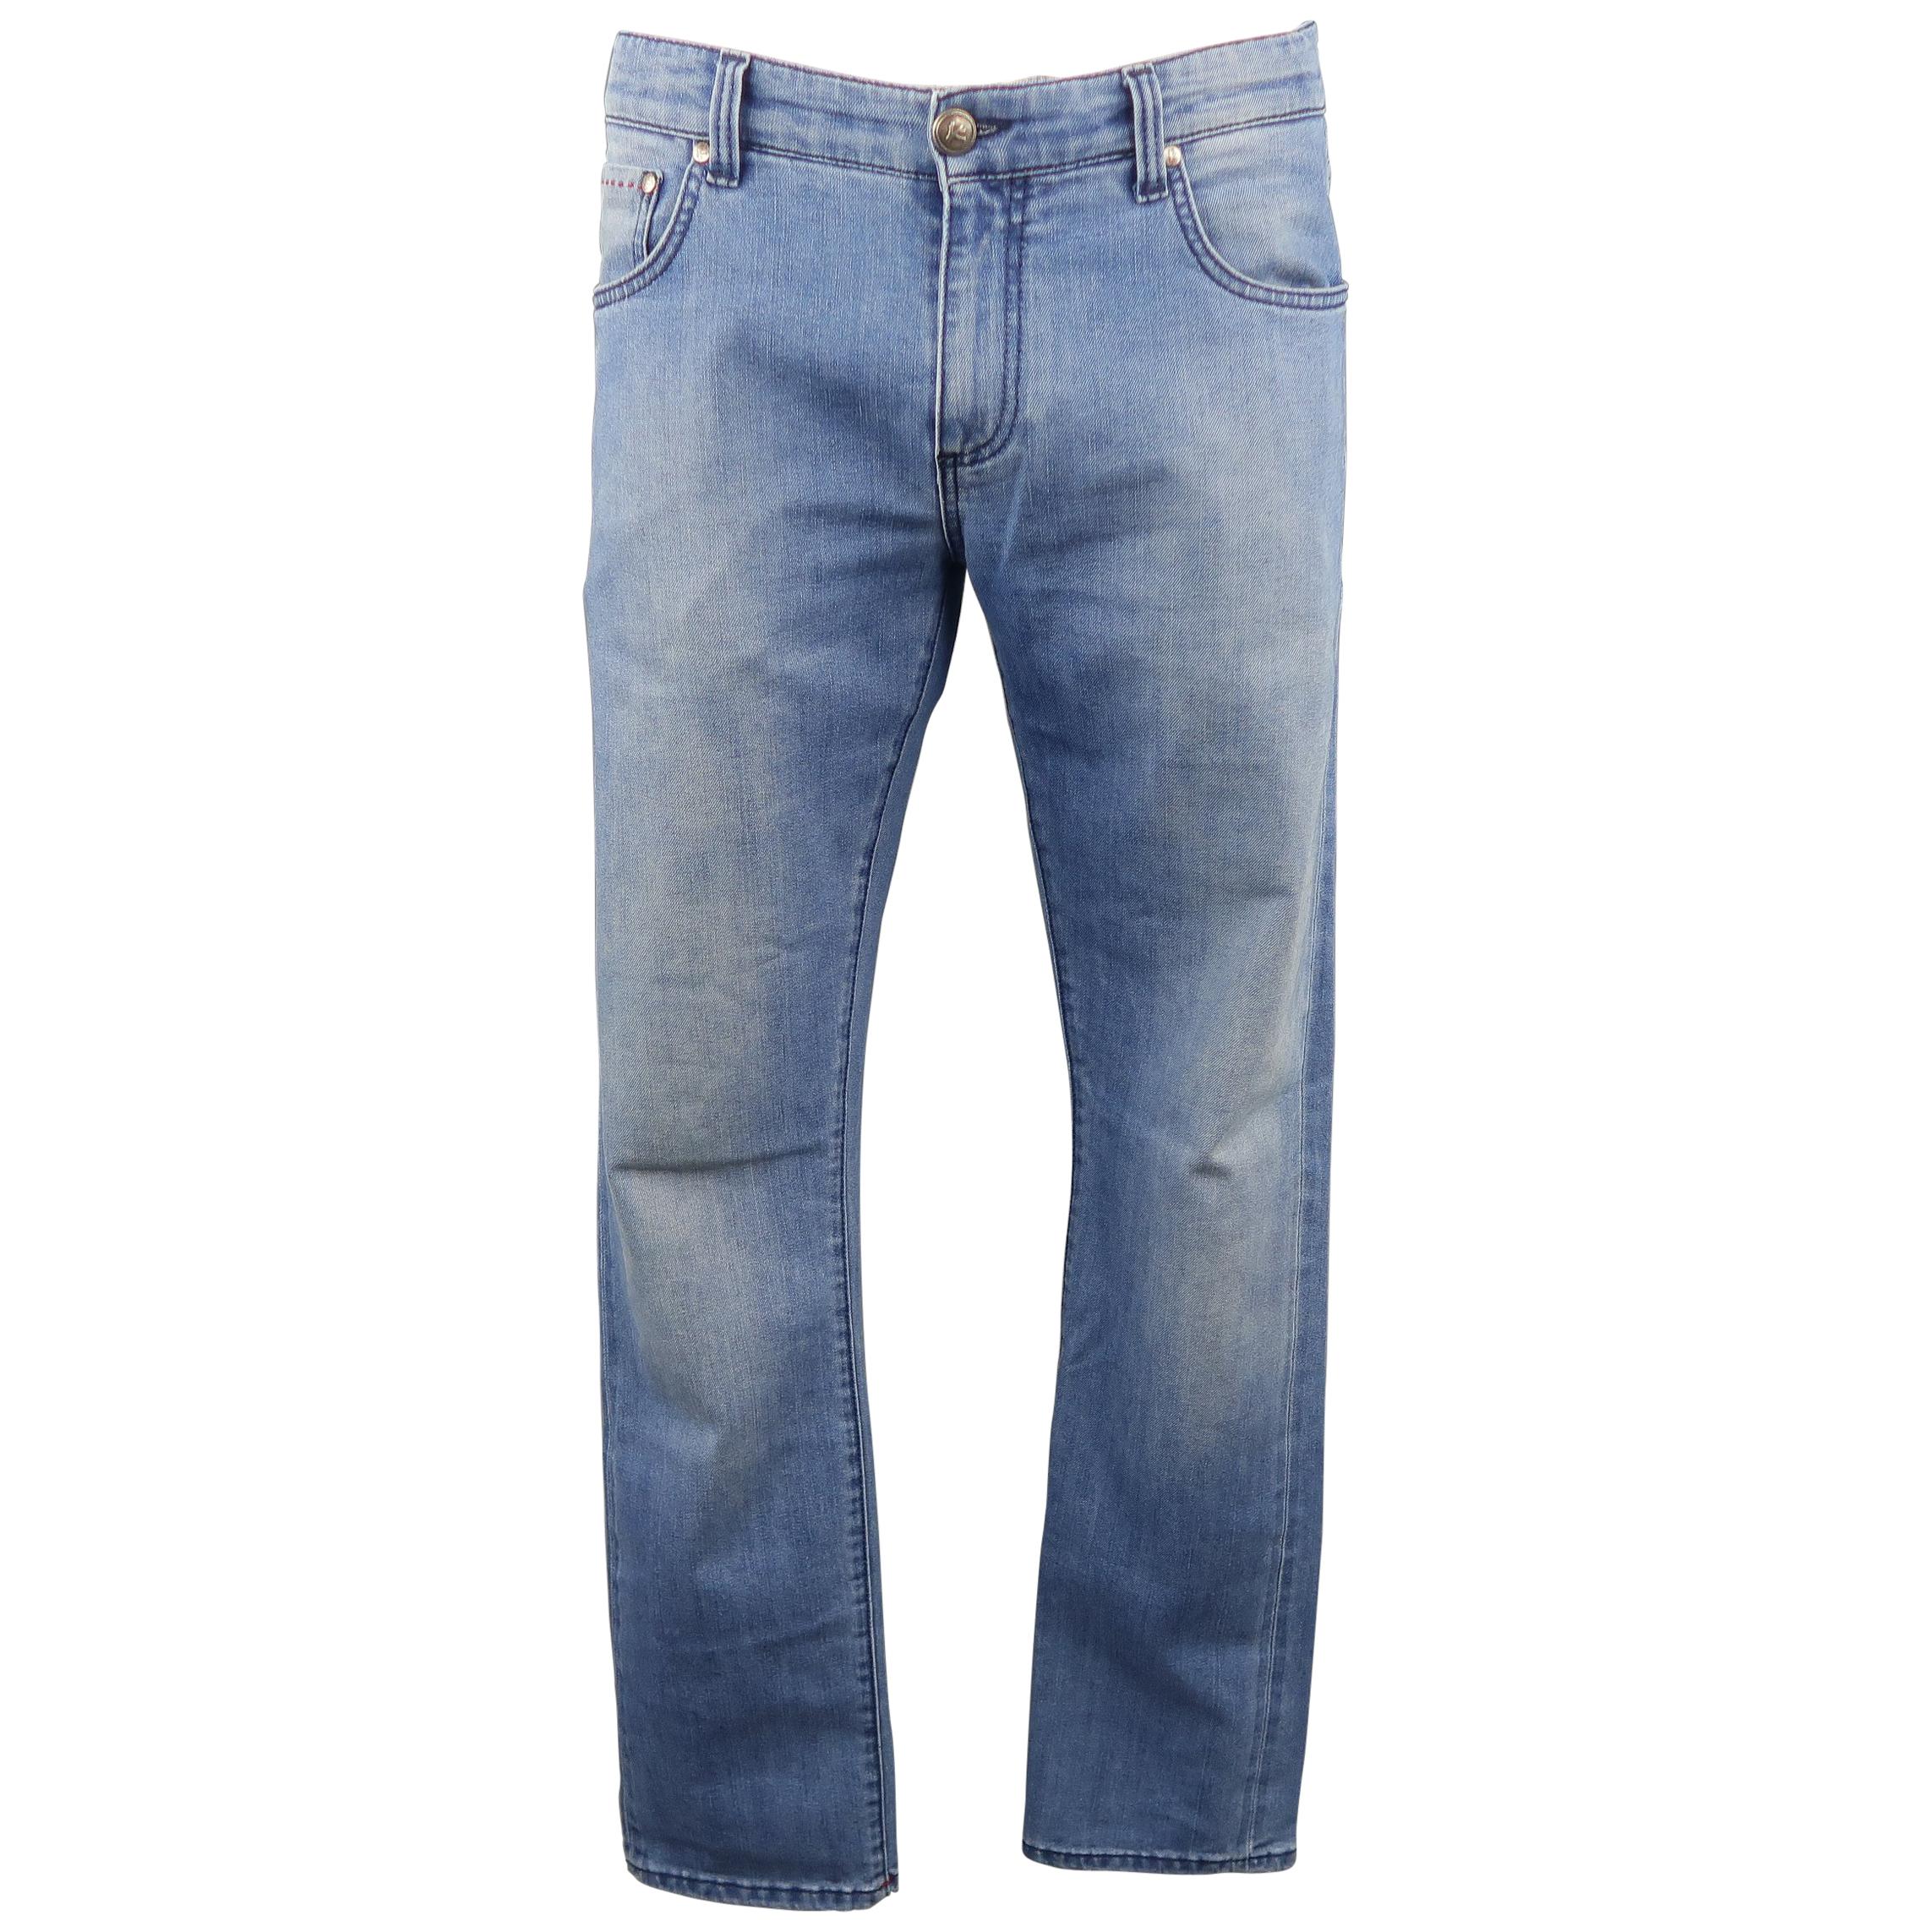  ISAIA Size 34 Blue Wash Selvedge Denim Jeans